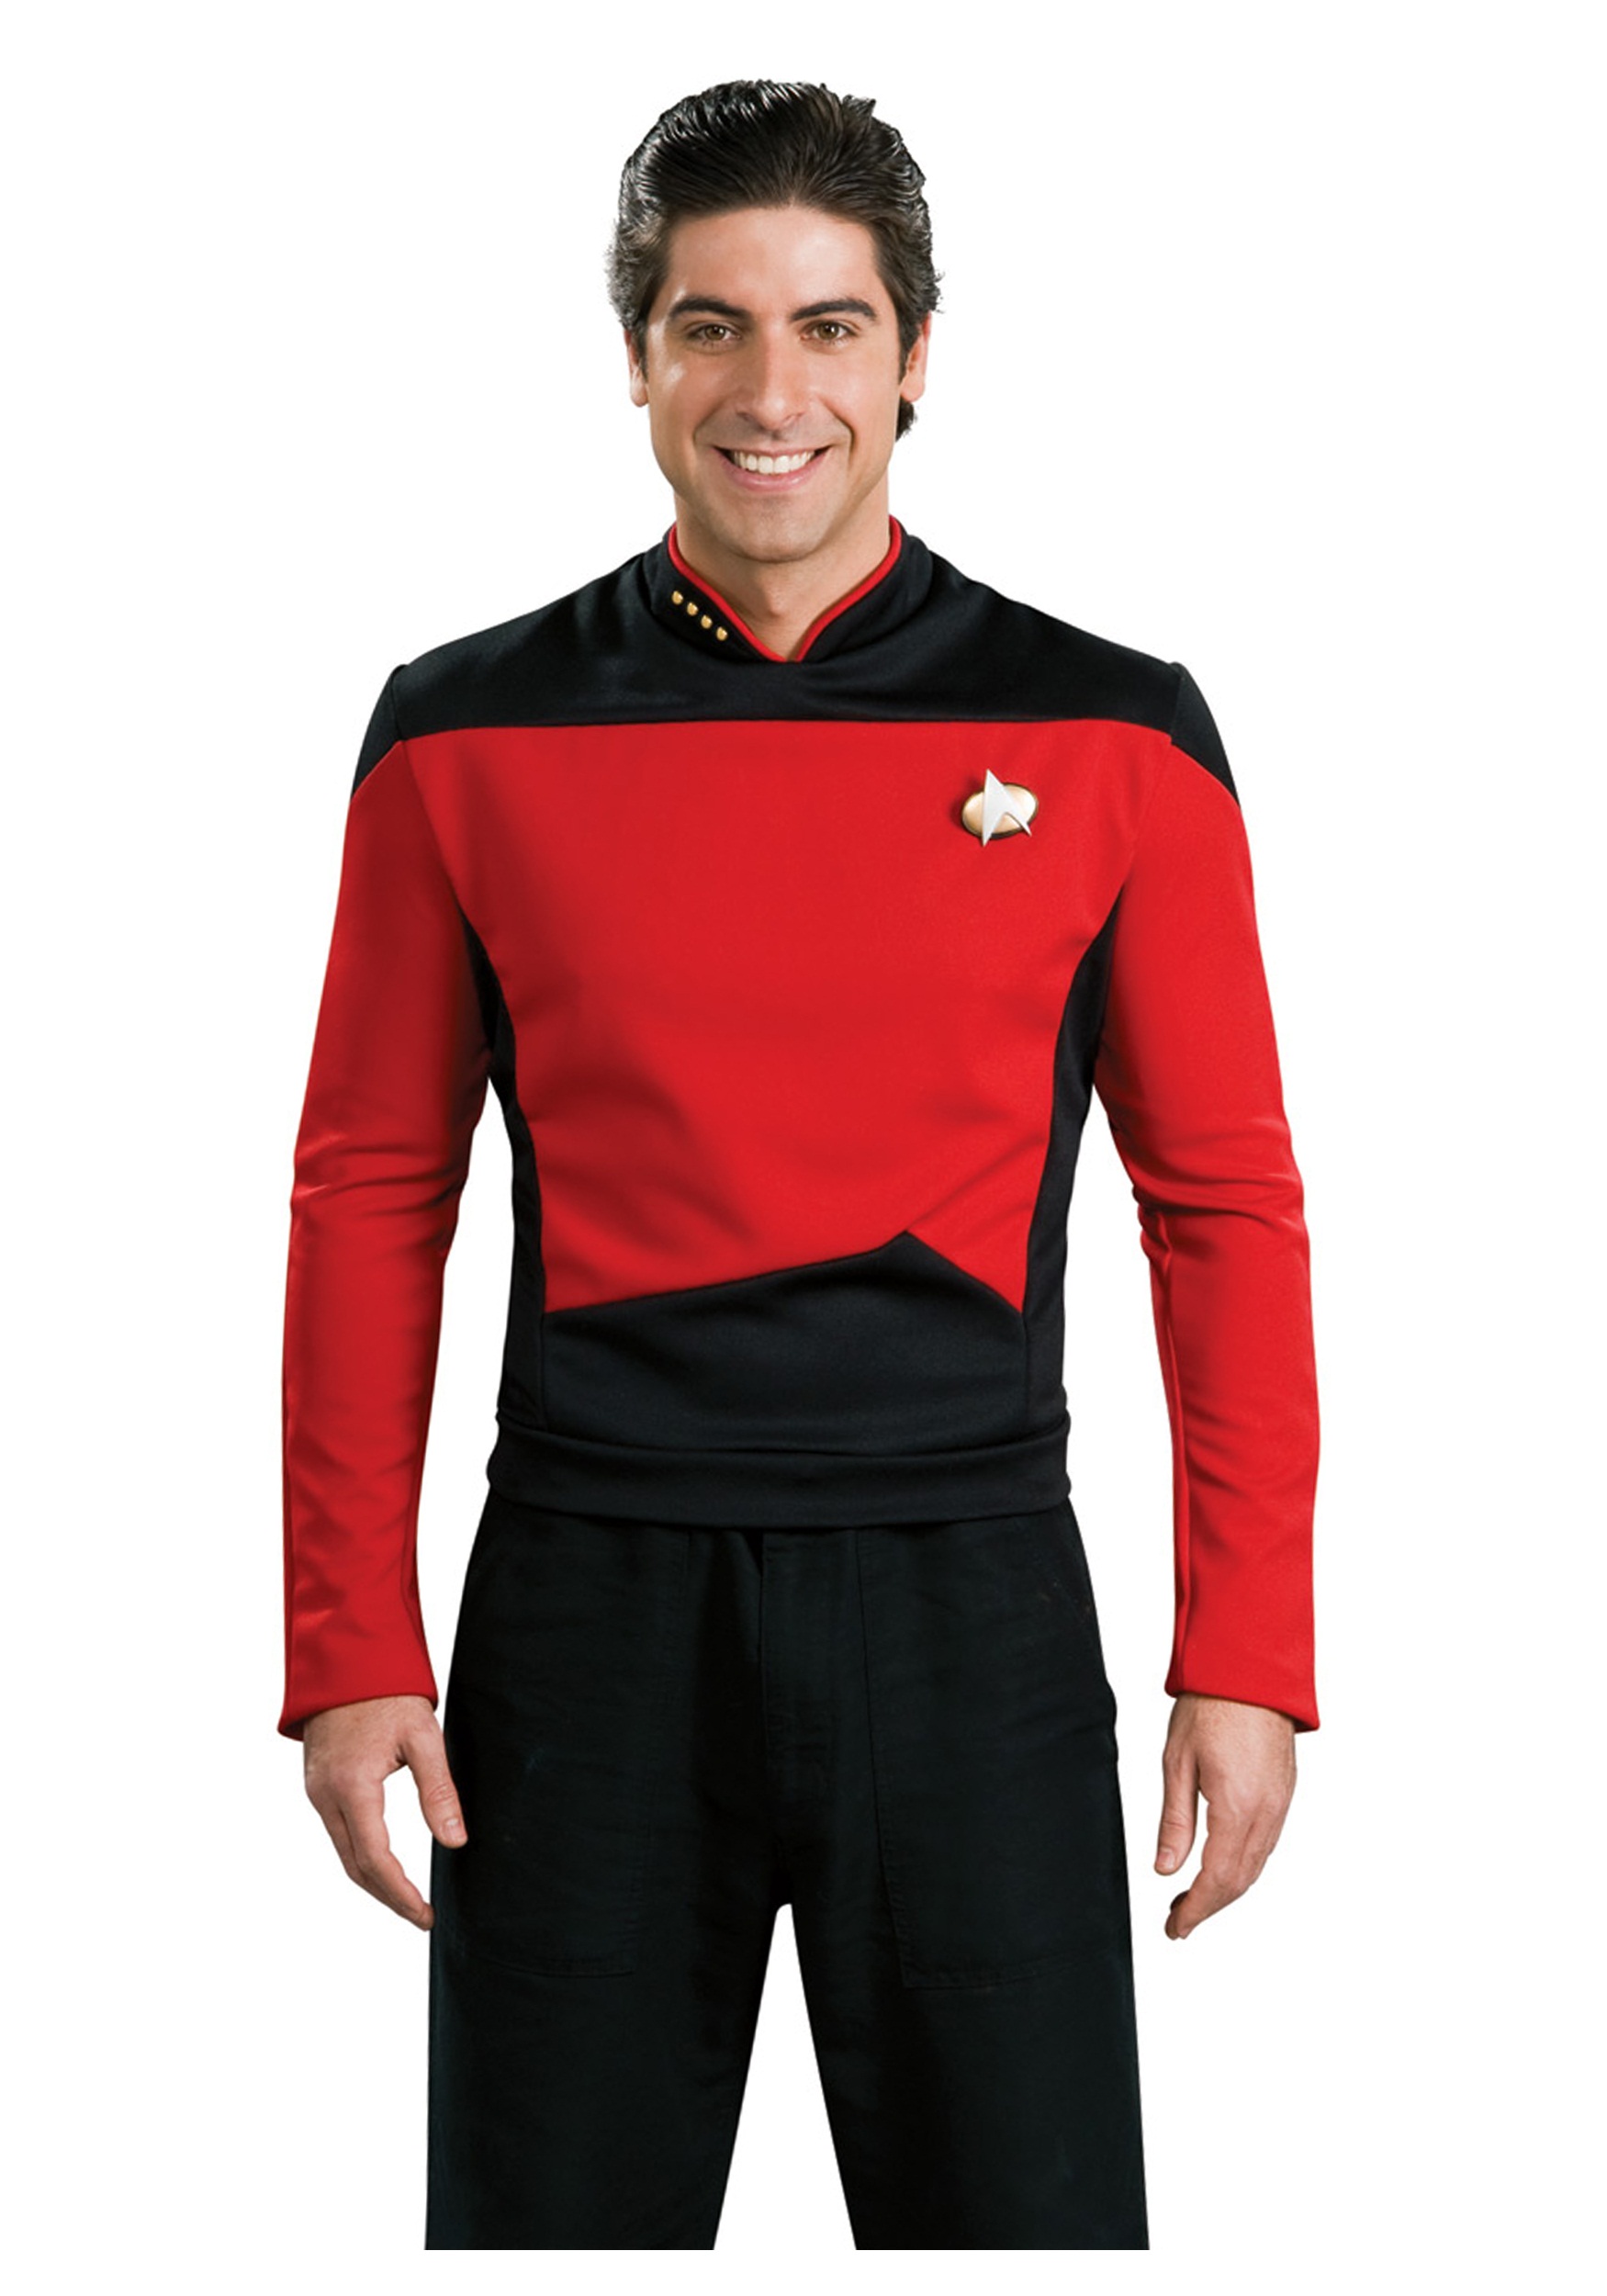 star trek data red uniform